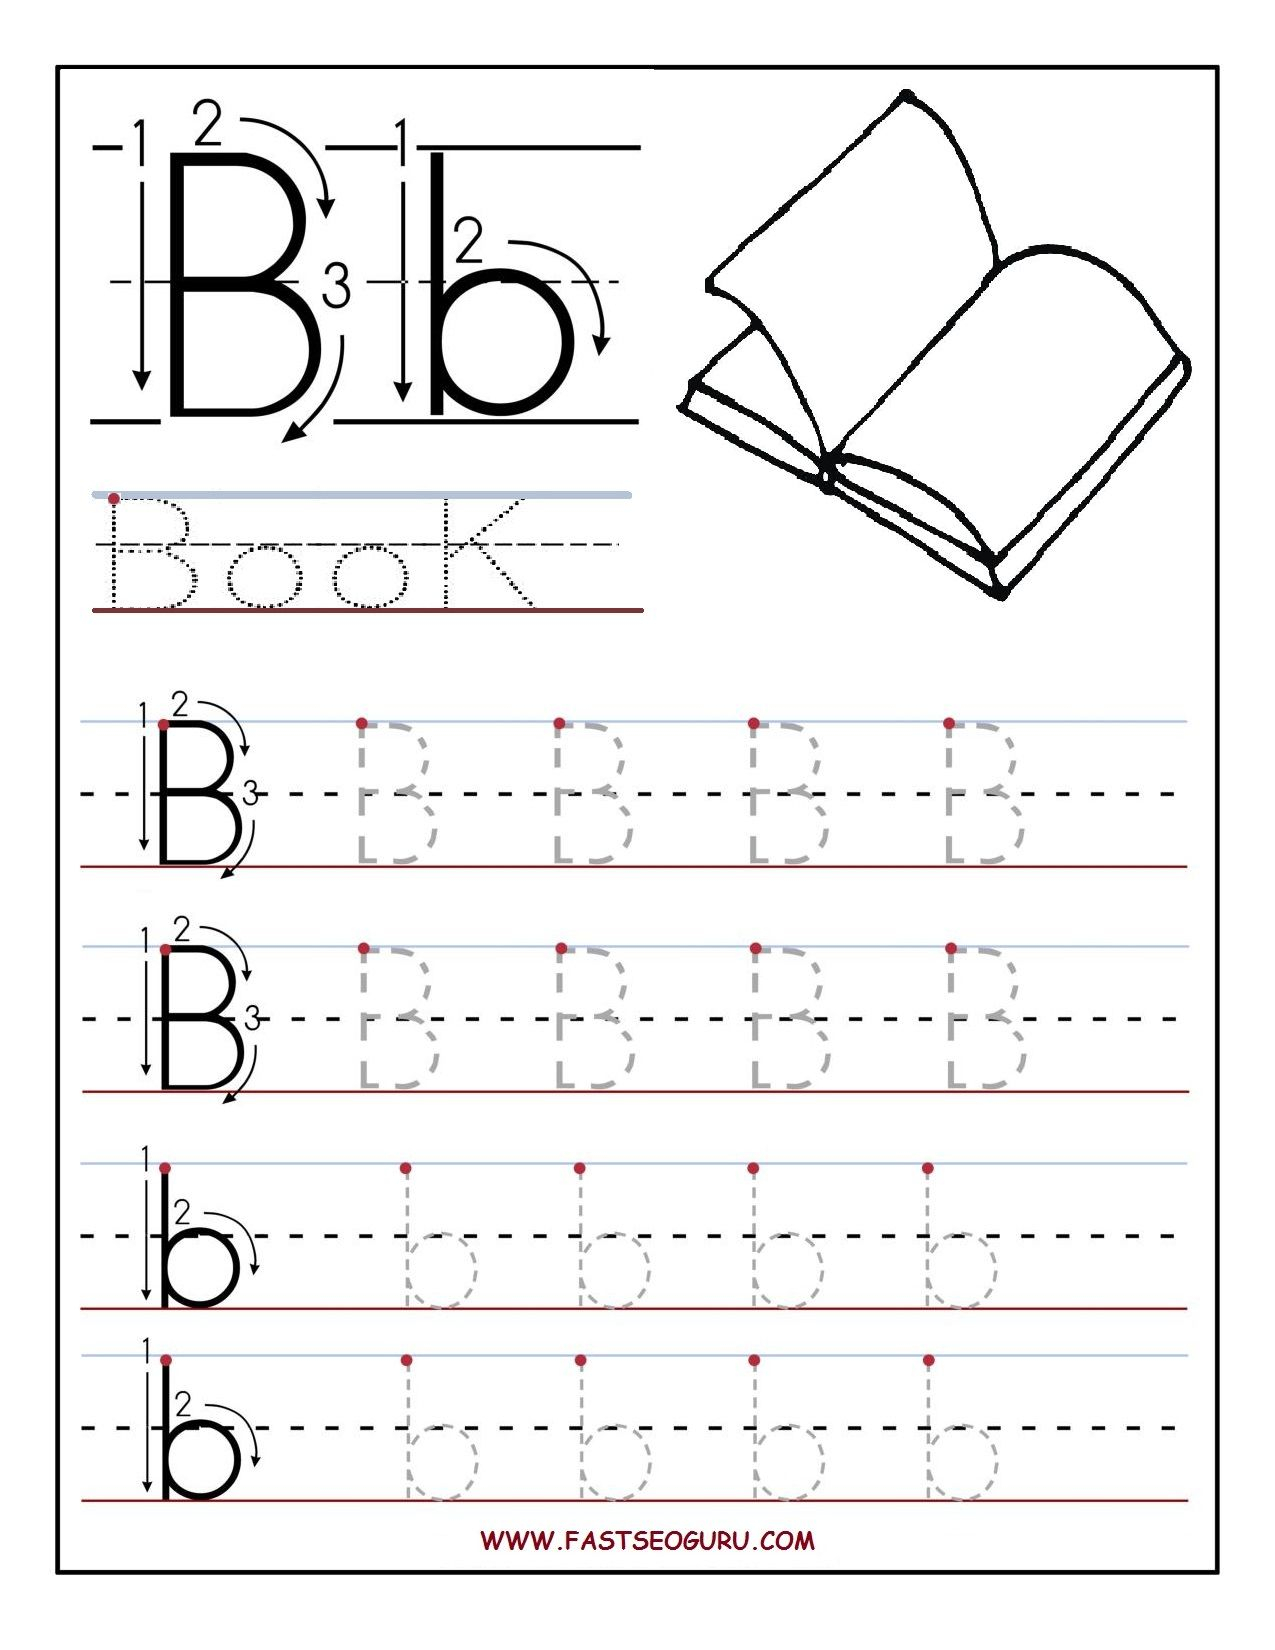 Printable Letter B Tracing Worksheets For Preschool | Letter intended for Letter I Tracing Worksheets Preschool